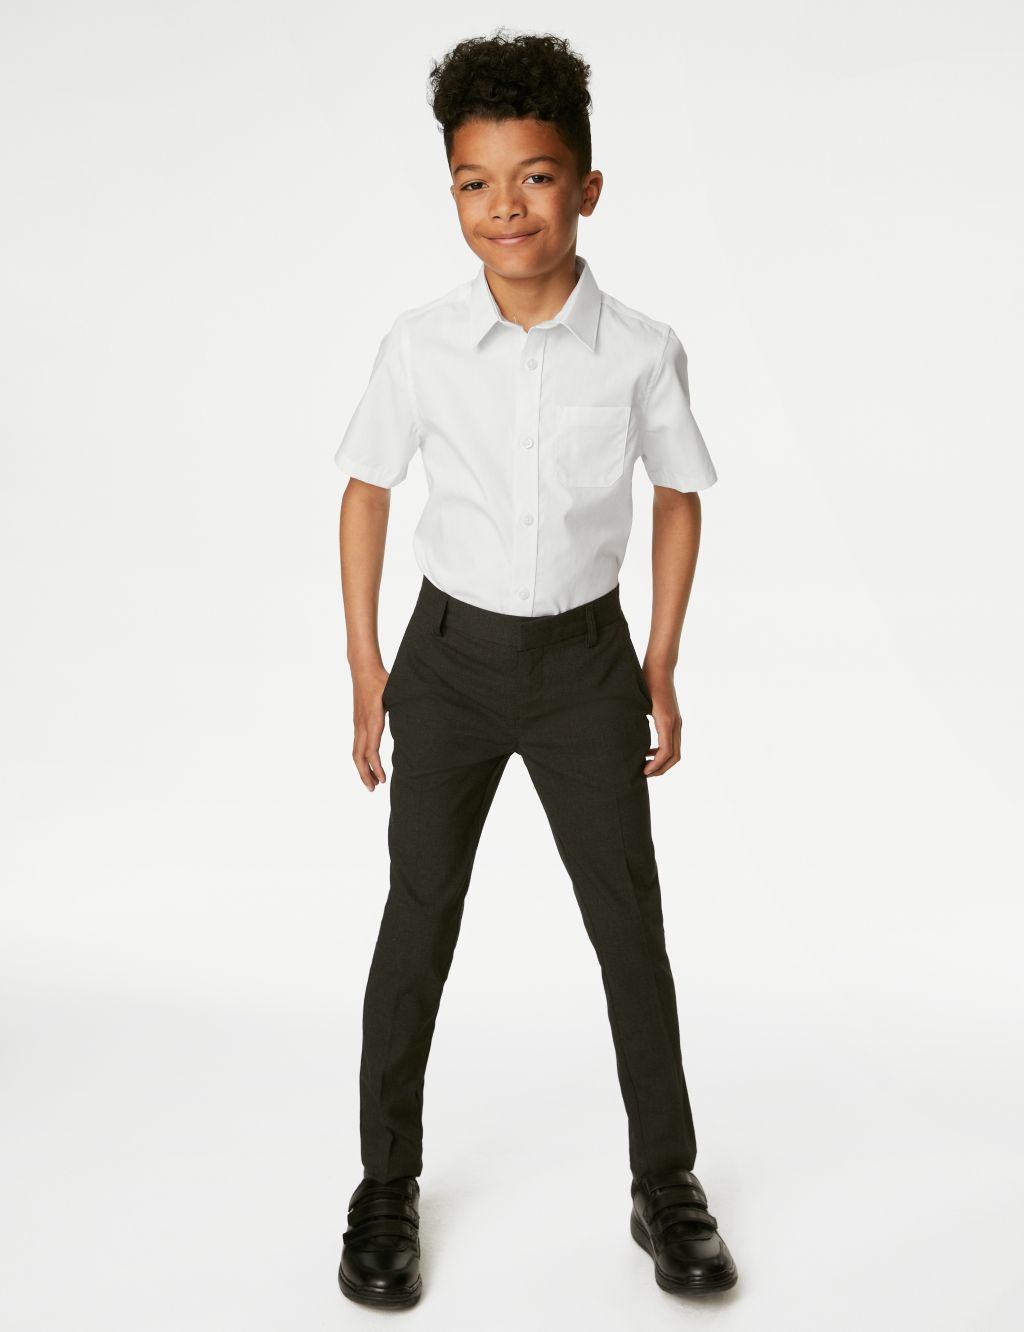 2pk Boys' Regular Fit Cotton School Shirts (2-18 Yrs) image 3